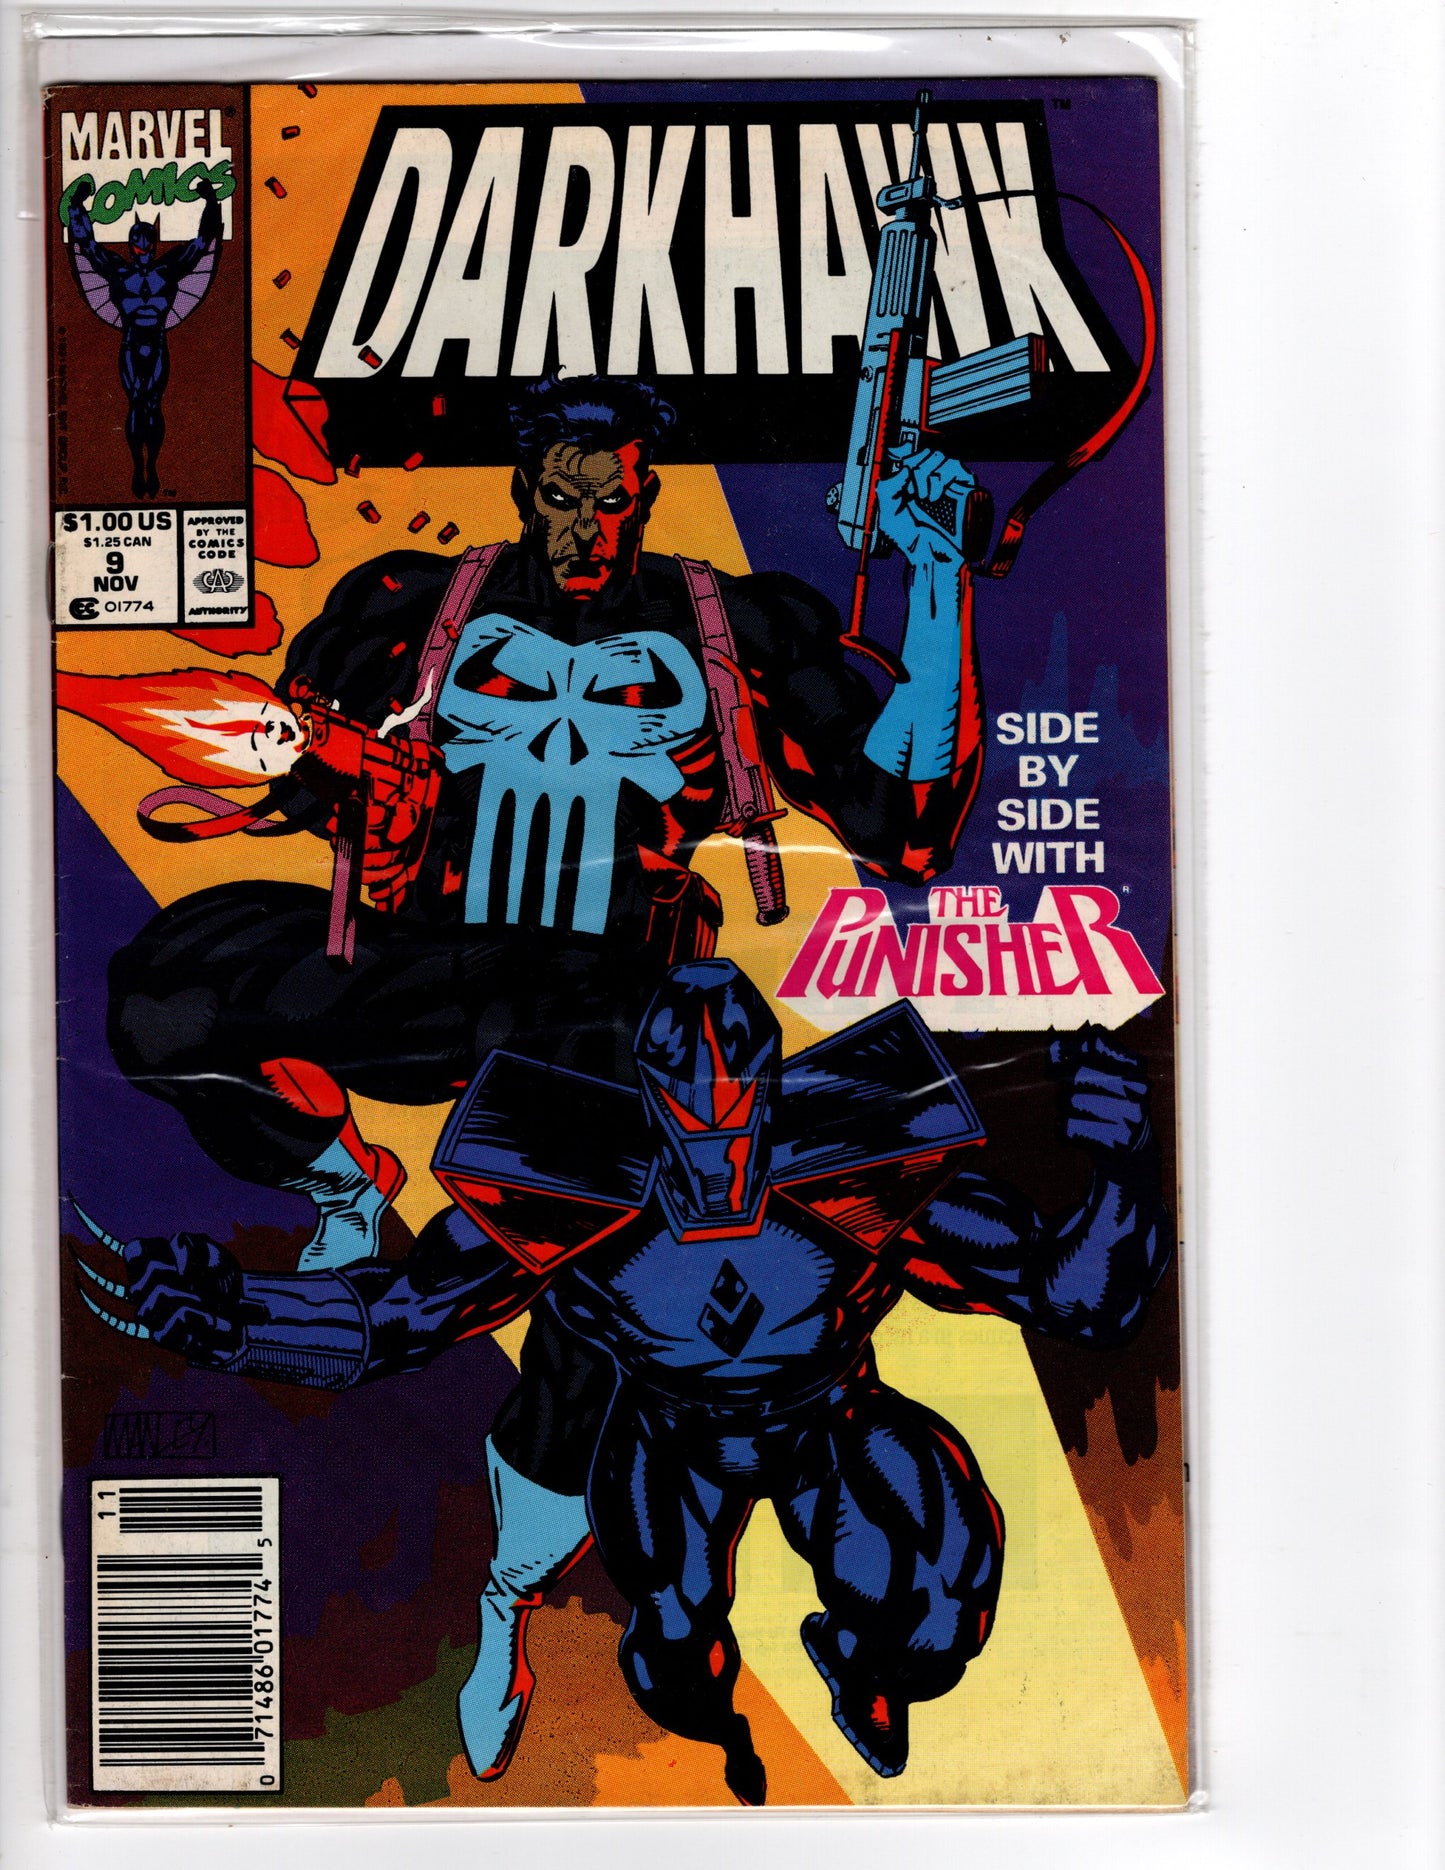 Darkhawk #9